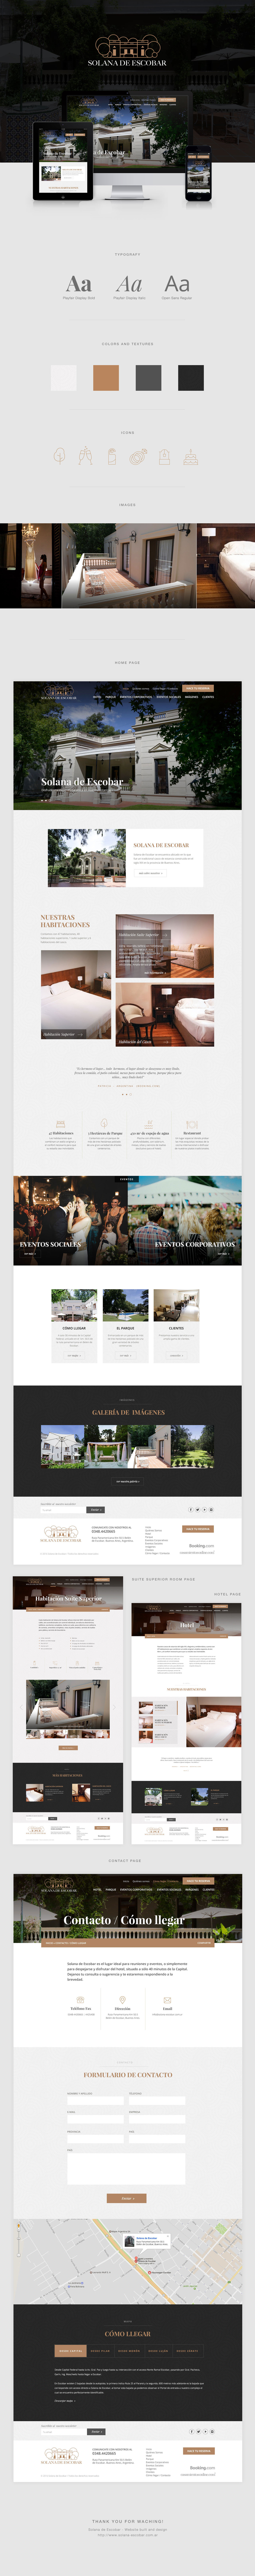 Website site hotel solanadeescobar Events Responsive Web